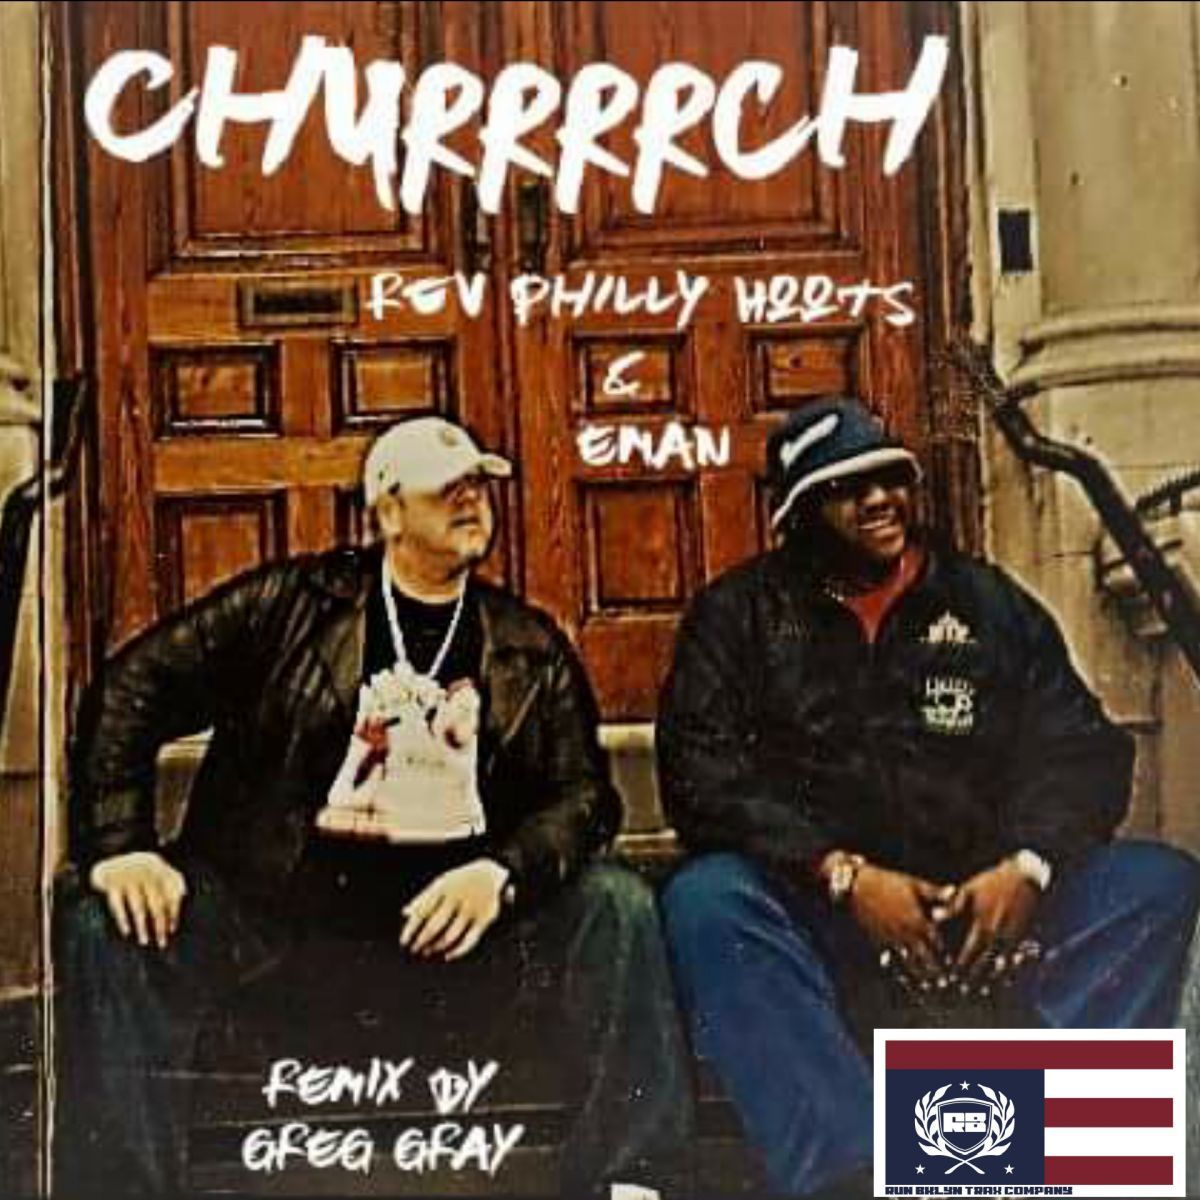 The Rev. Philly Hoots & Eman - Churrrrch / Run Bklyn Trax Company